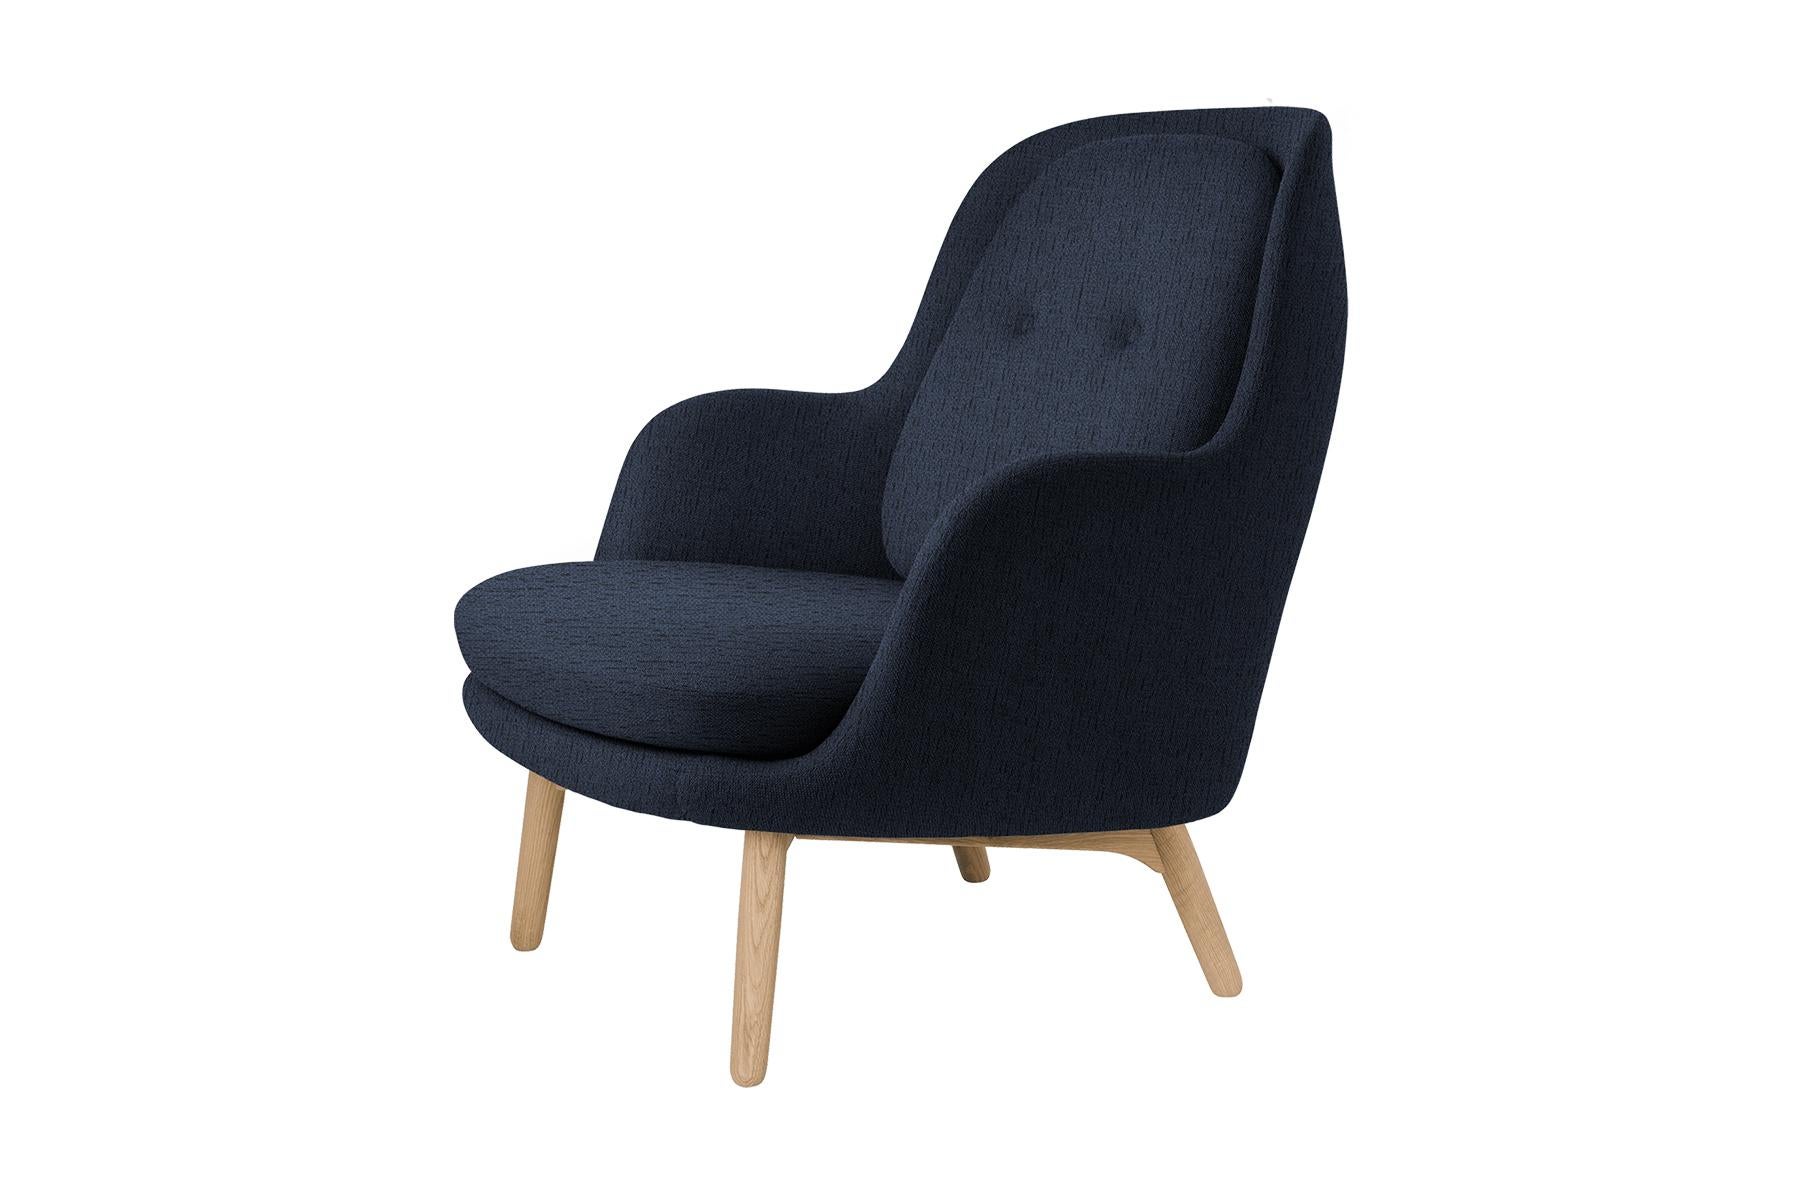 American Jaime Hayon Fri Model Jh5 Lounge Chair, Wood For Sale